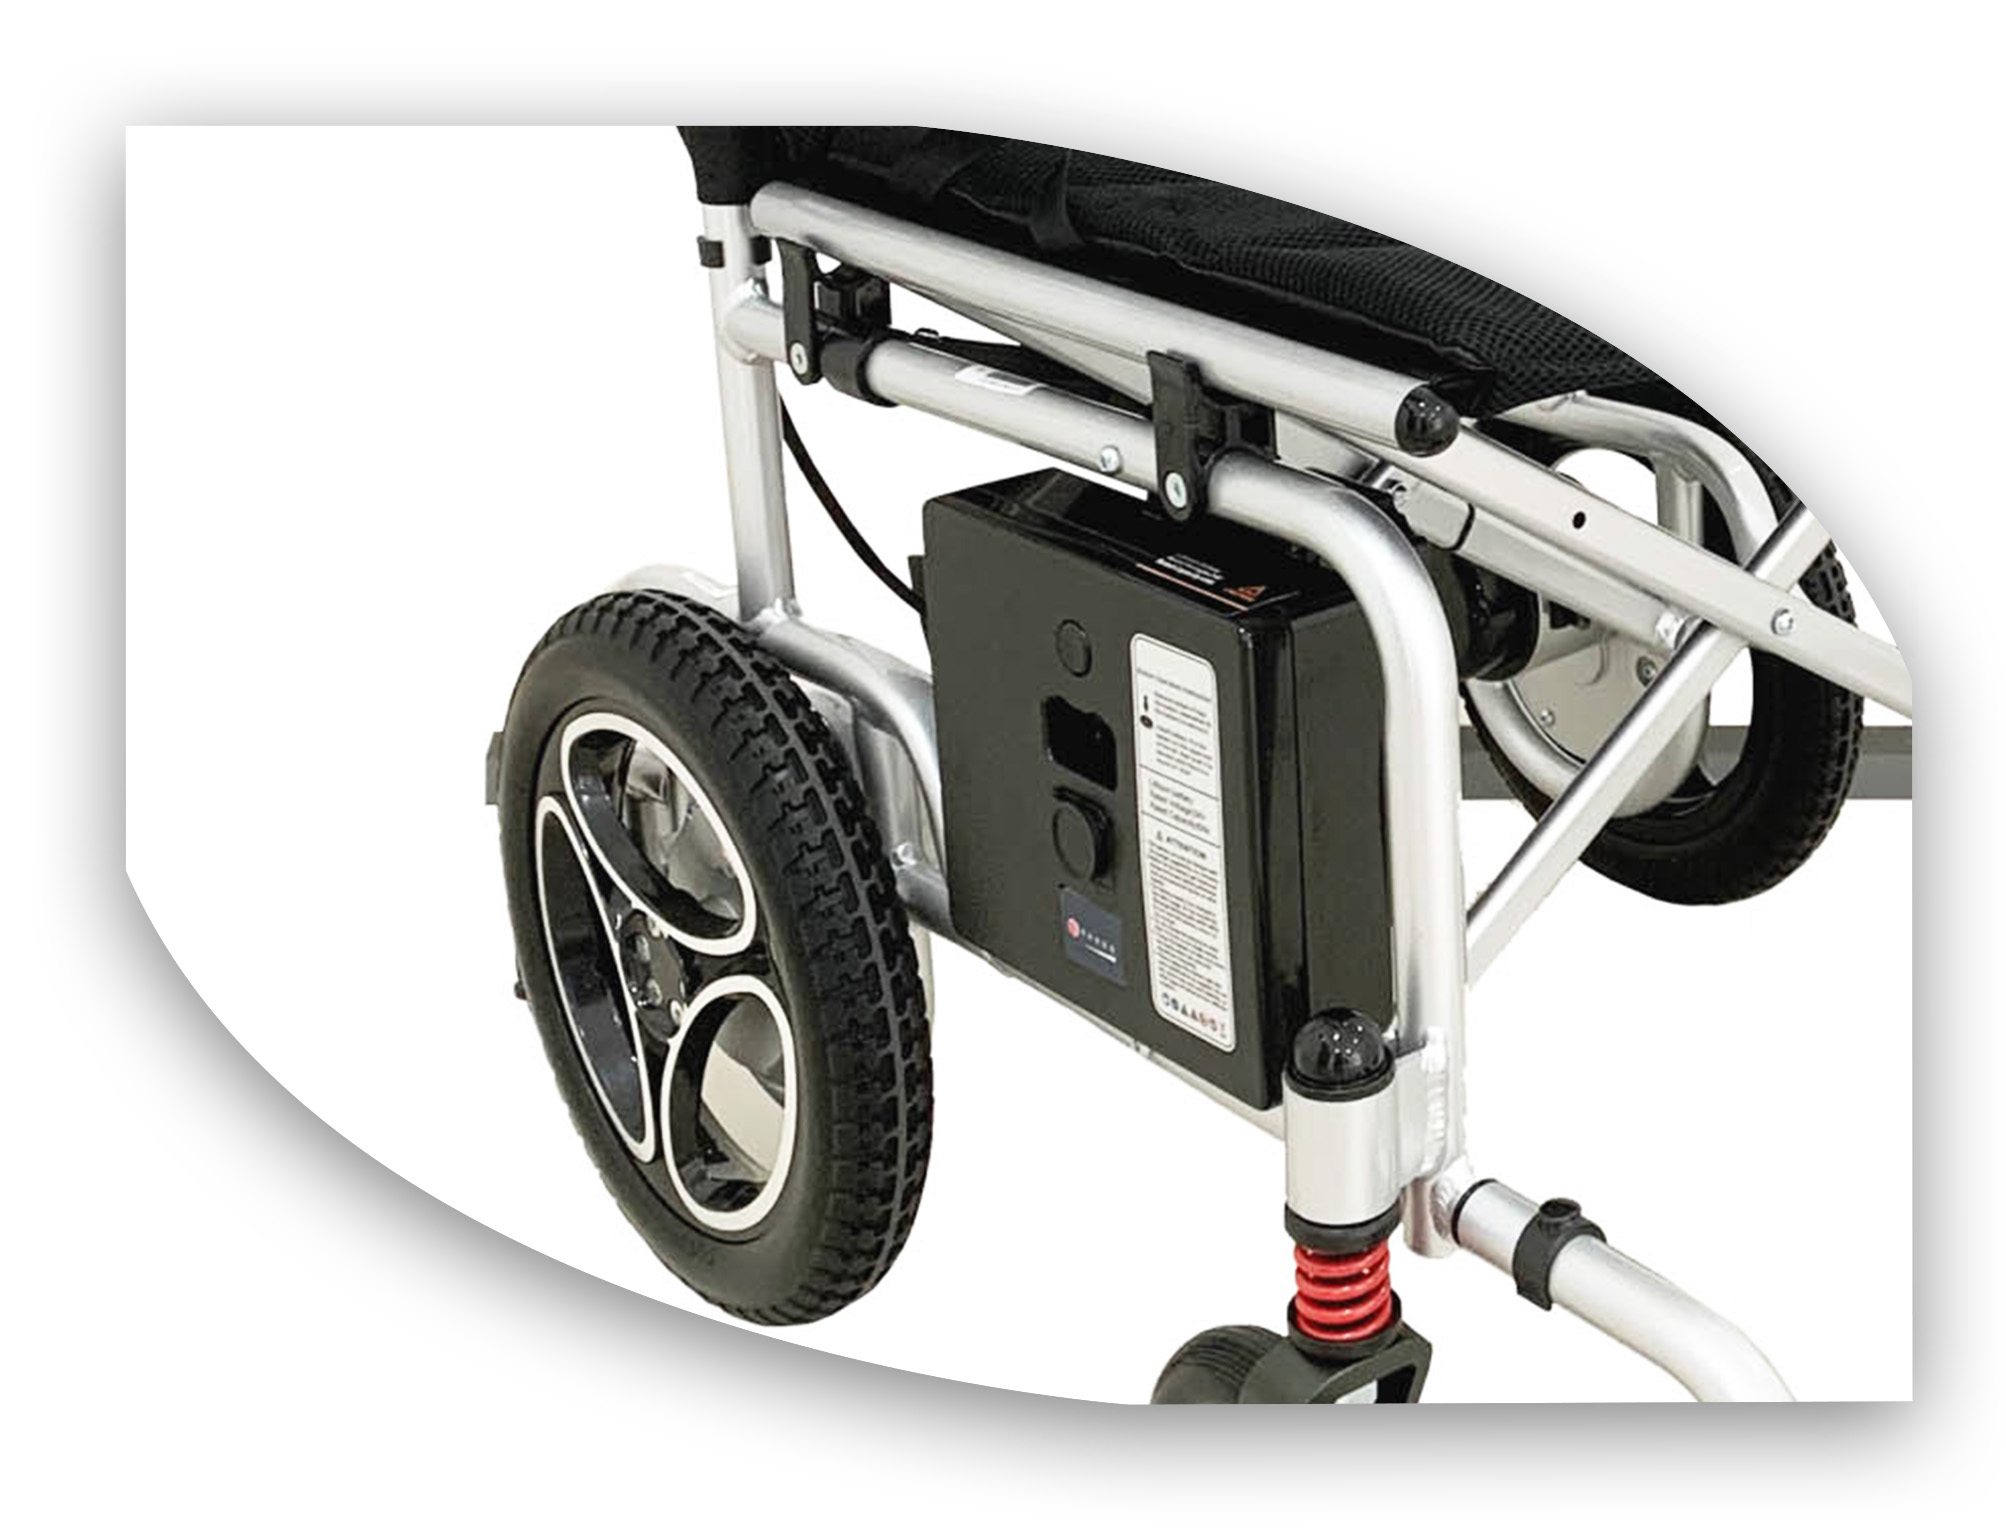  Ultra-Lite 2 Electric Wheelchair singapore falcon